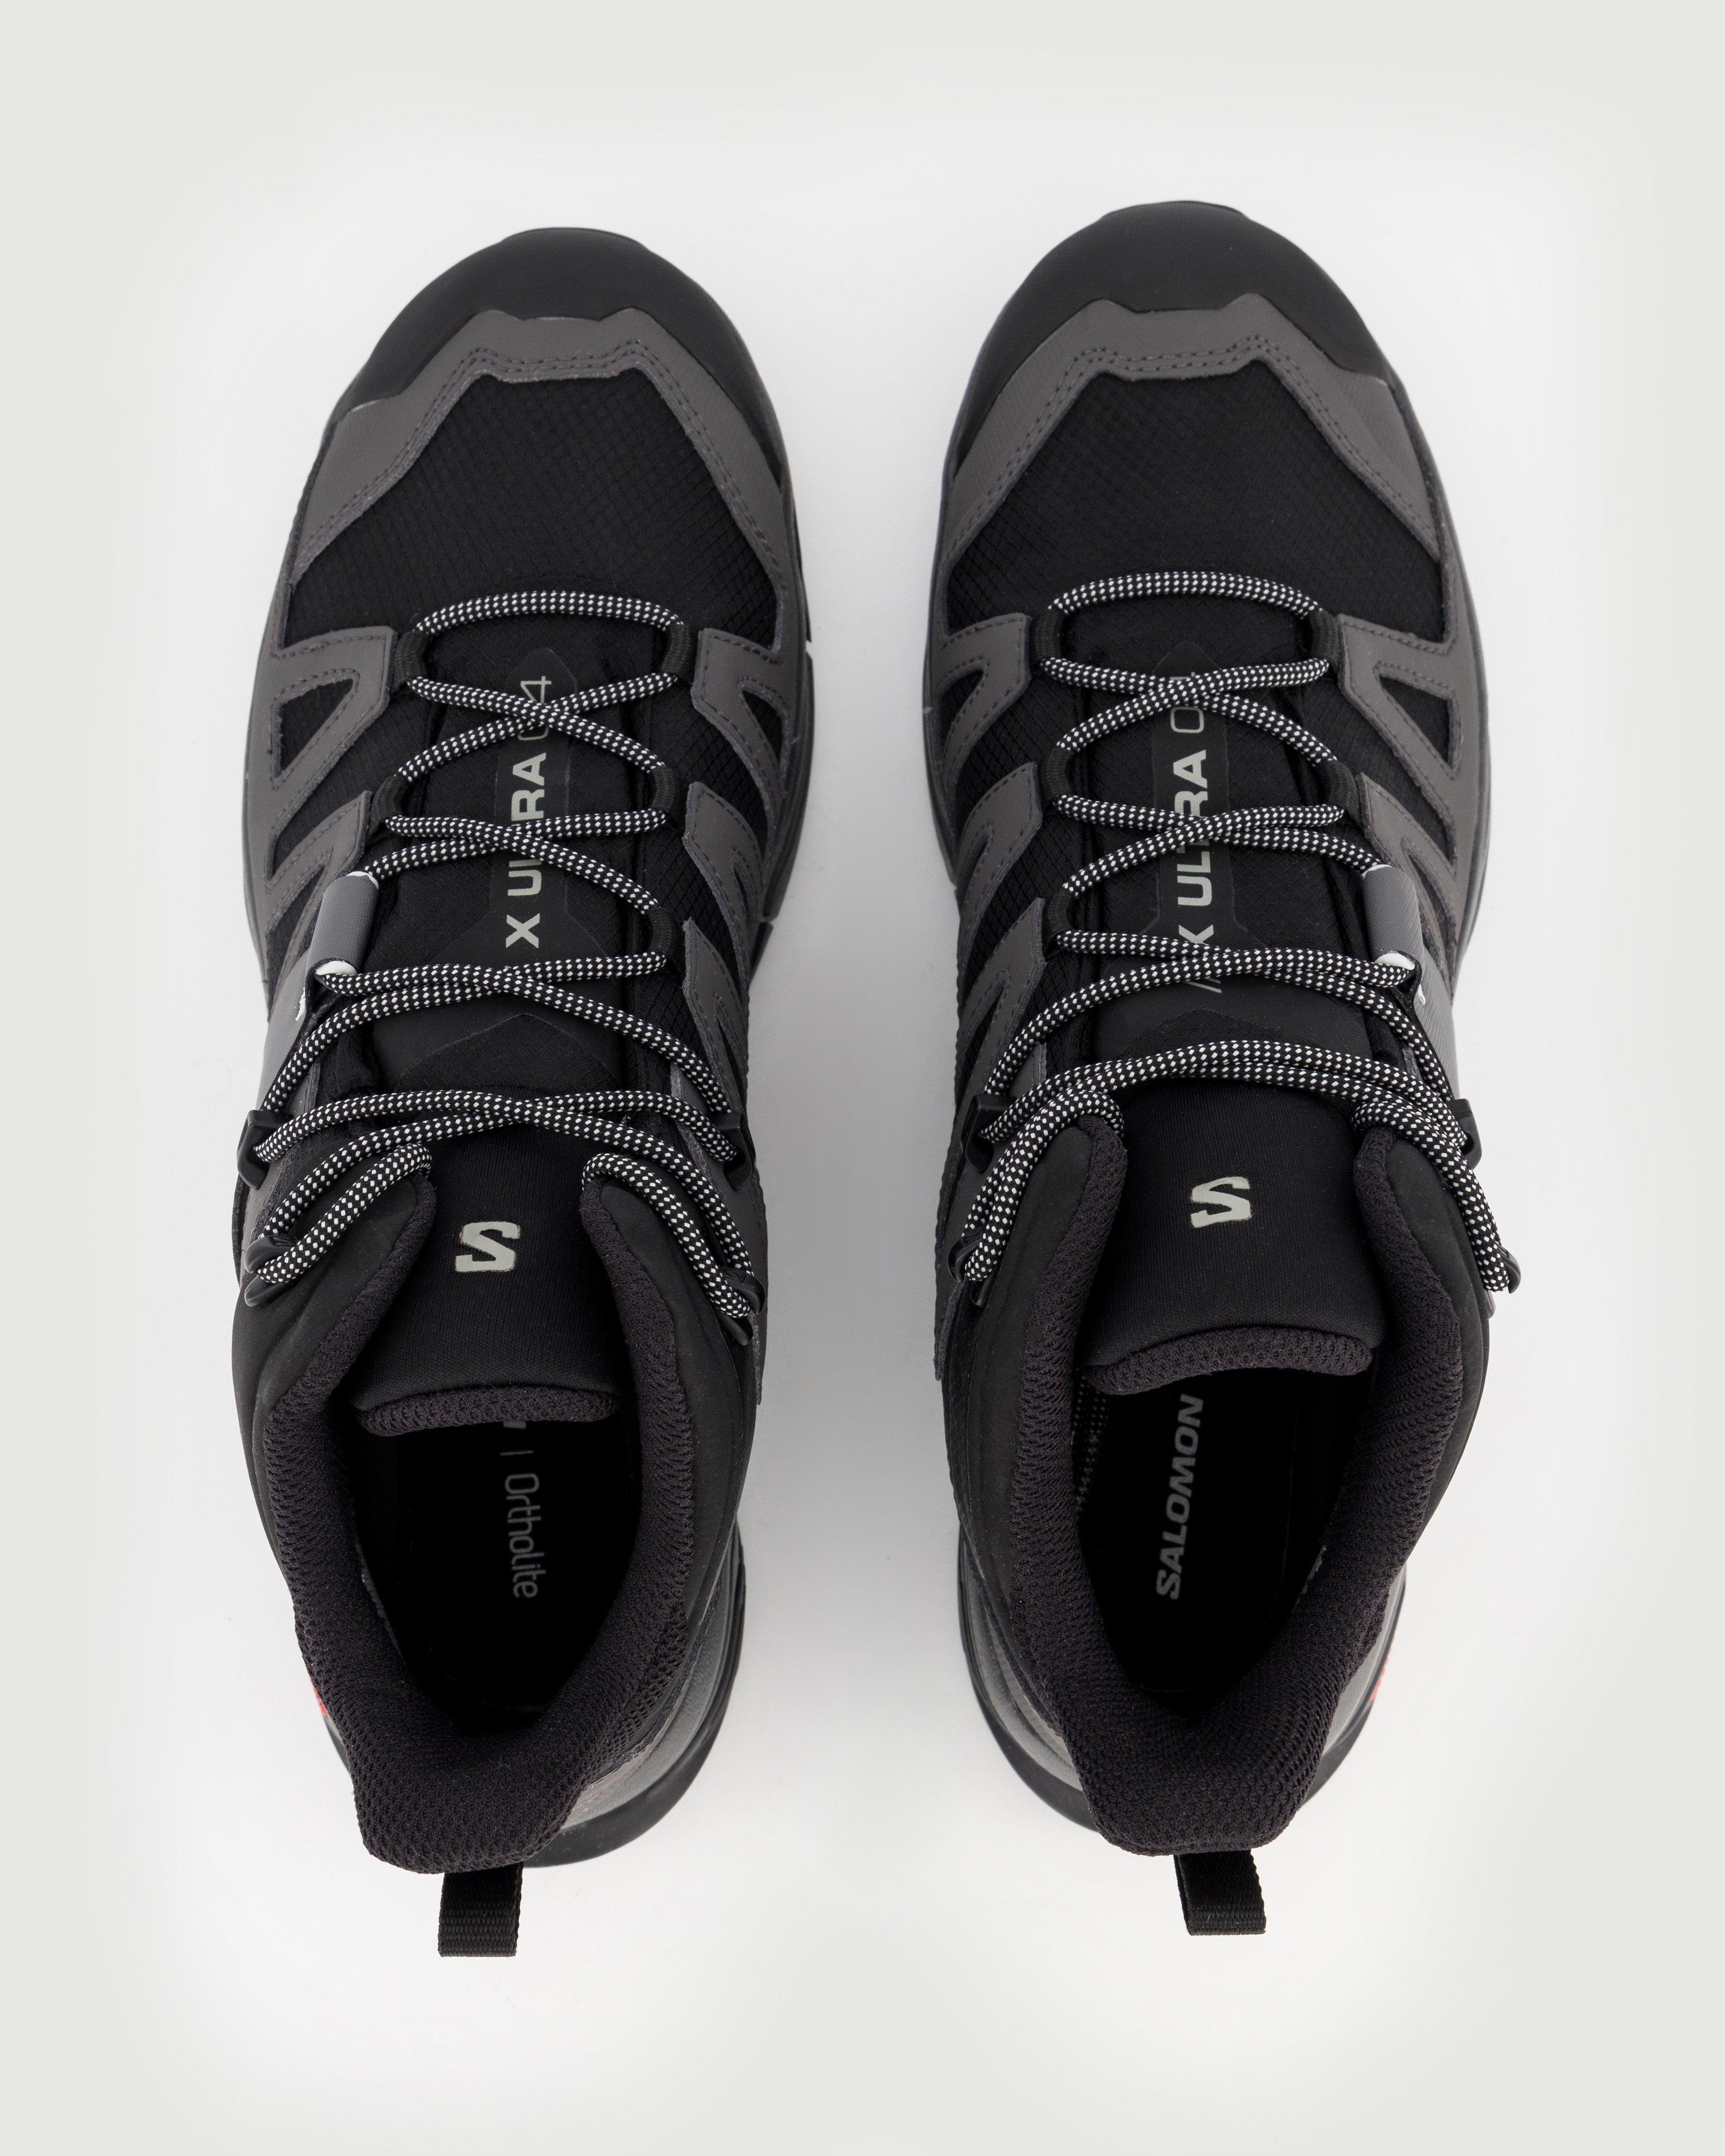 Salomon Men’s X Ultra 4 Mid GTX Hiking Boots -  Charcoal